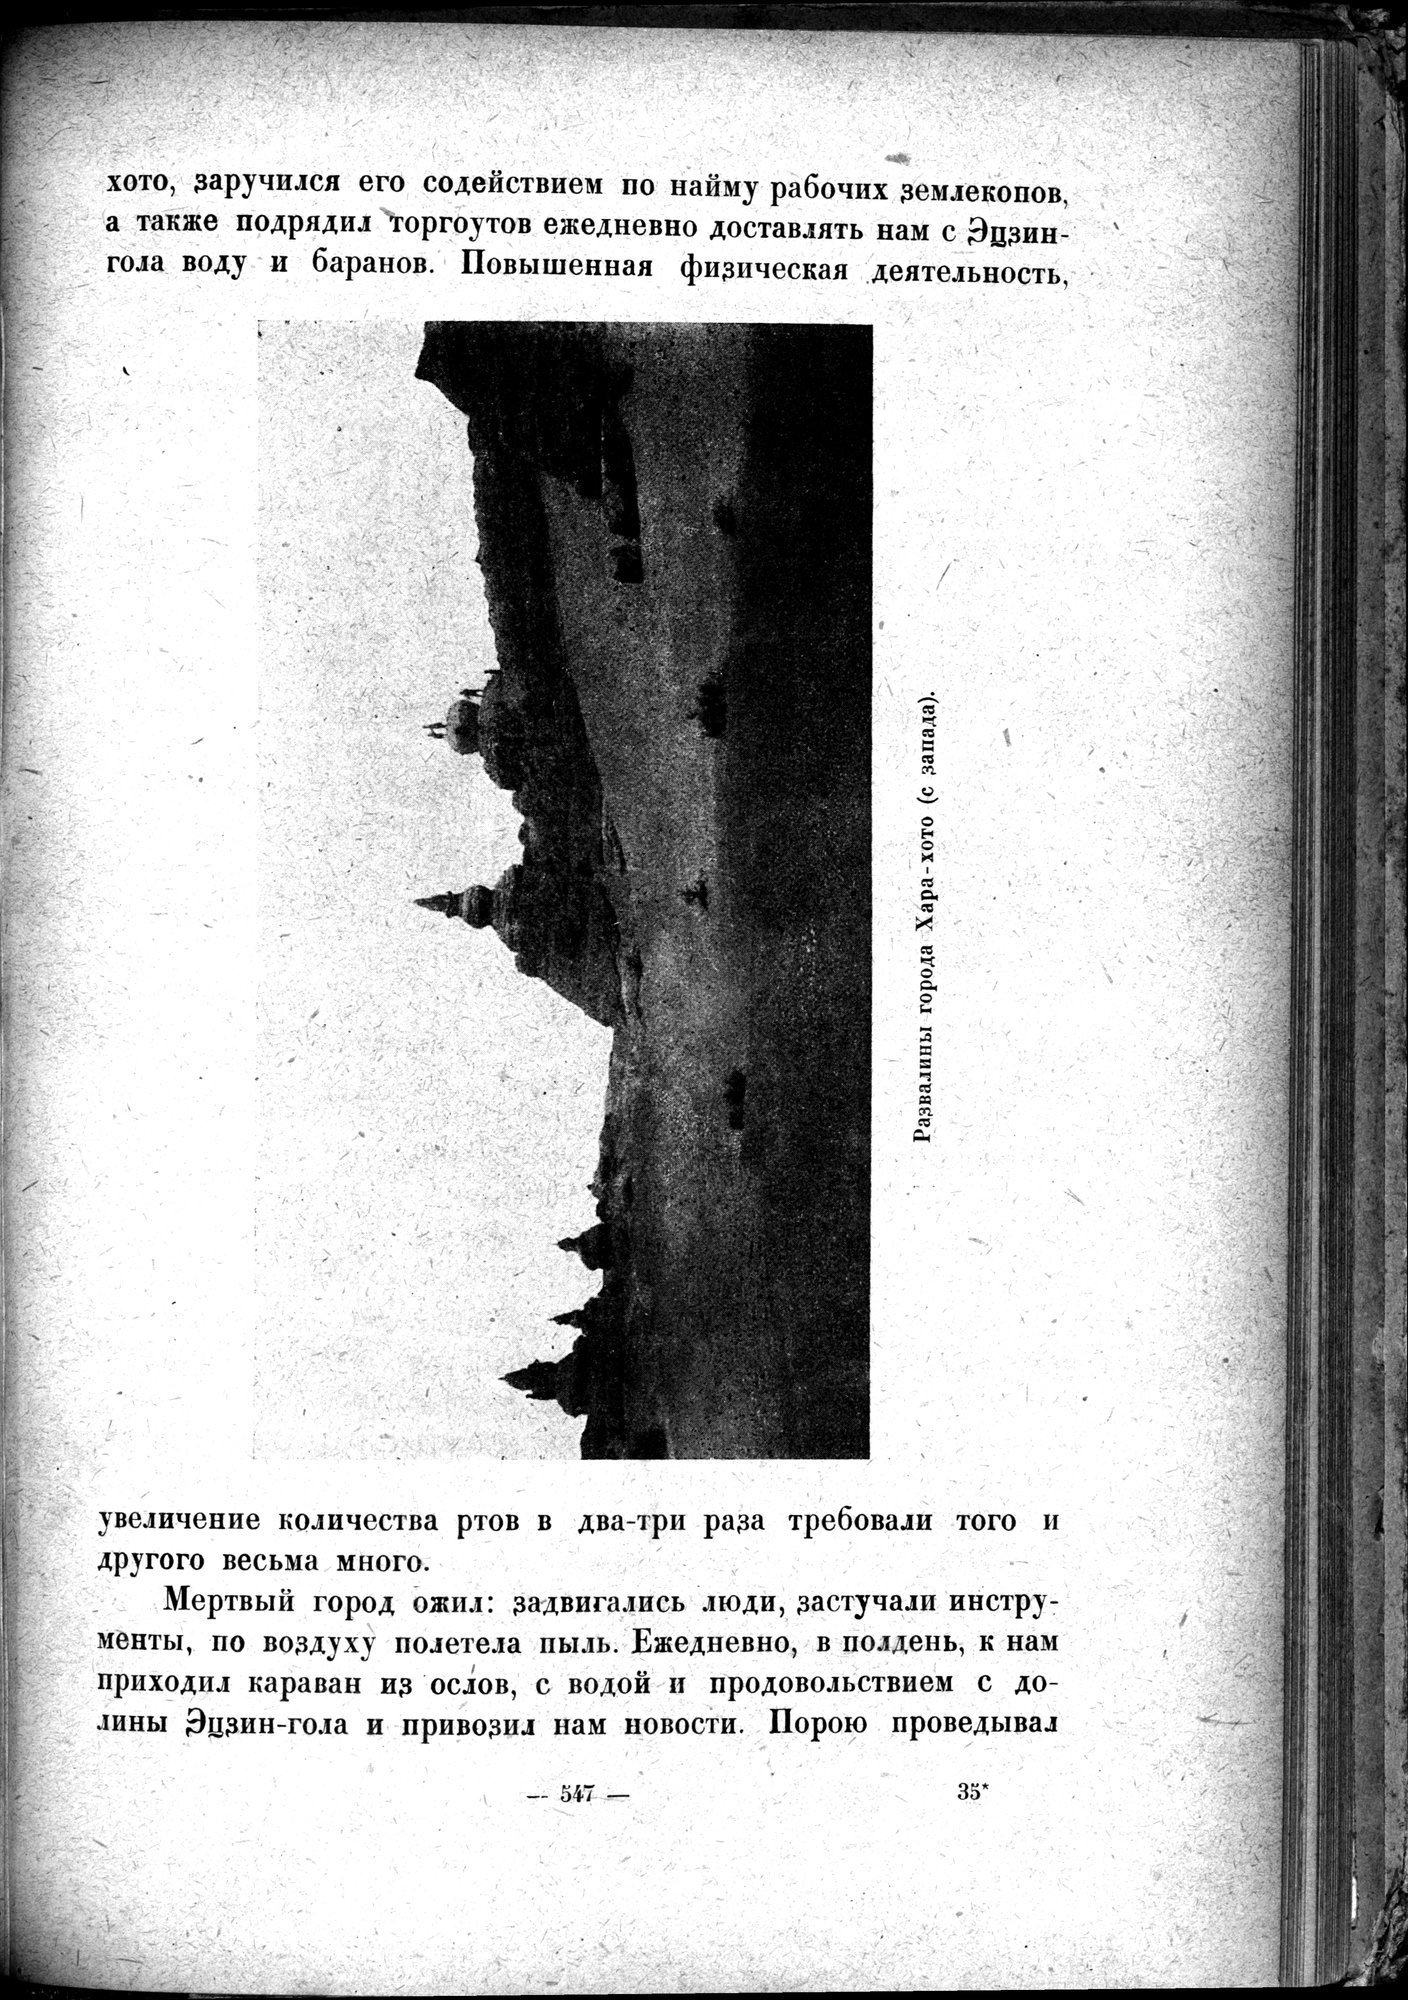 Mongoliya i Amdo i mertby gorod Khara-Khoto : vol.1 / Page 633 (Grayscale High Resolution Image)